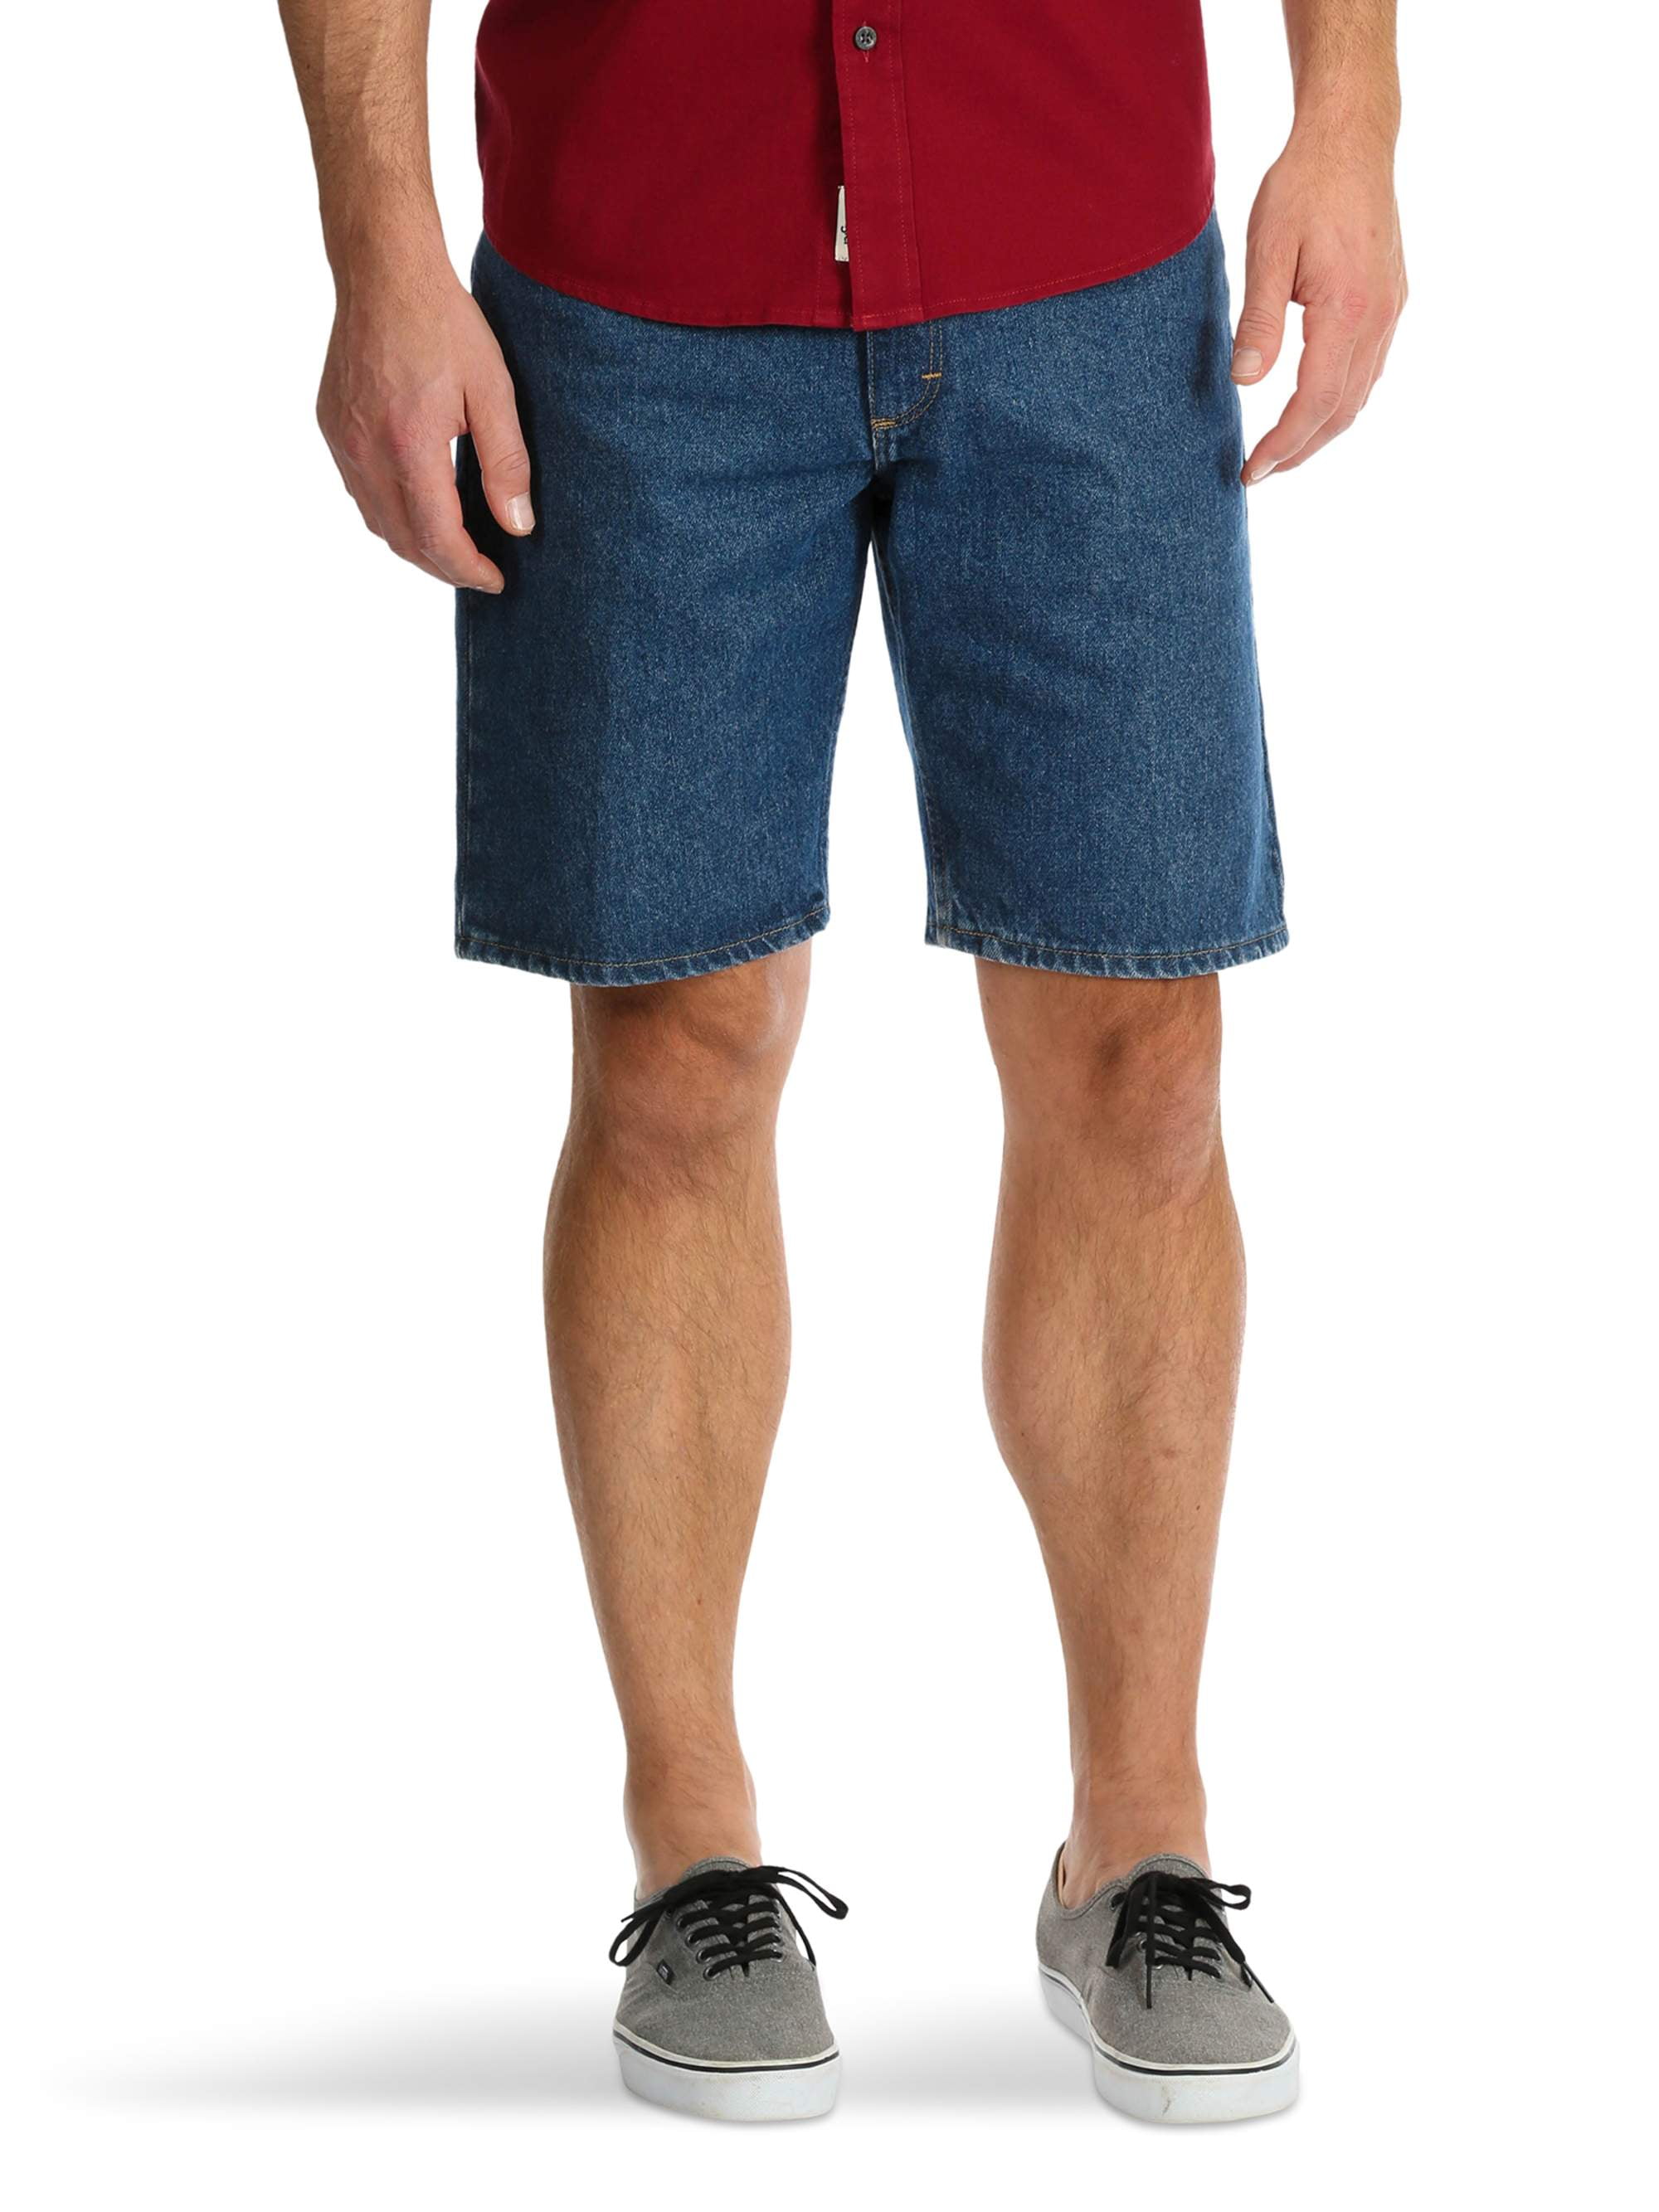 Buy > walmart knee length shorts > in stock